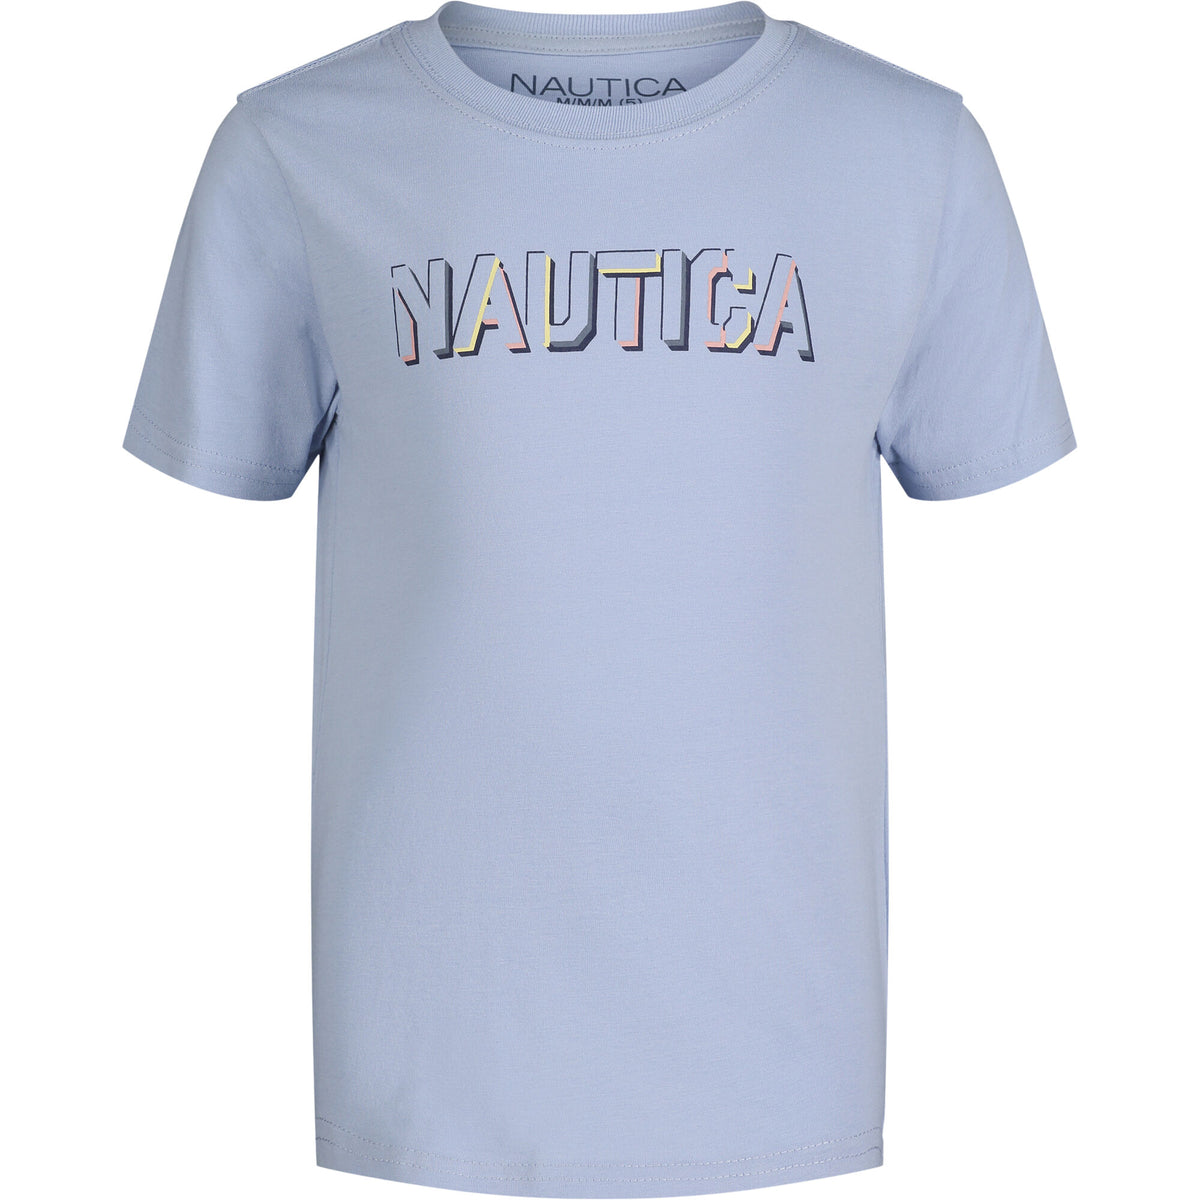 Nautica Toddler Boys' Graphic T-Shirt (2T-4T) Azure Blue